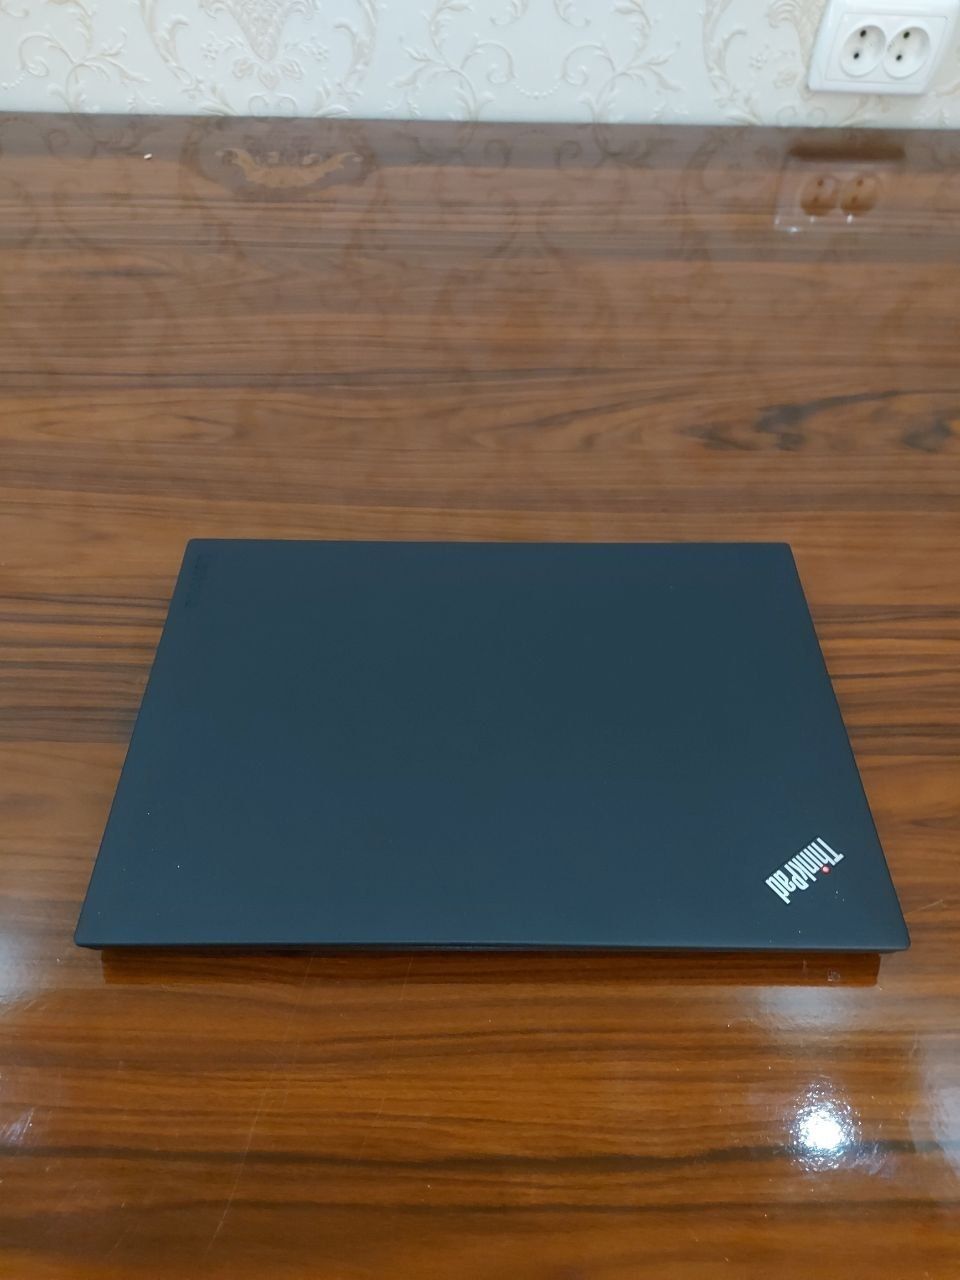 Lenovo Thinkpad T470 корейский модел ноутбук для офисных и не толка